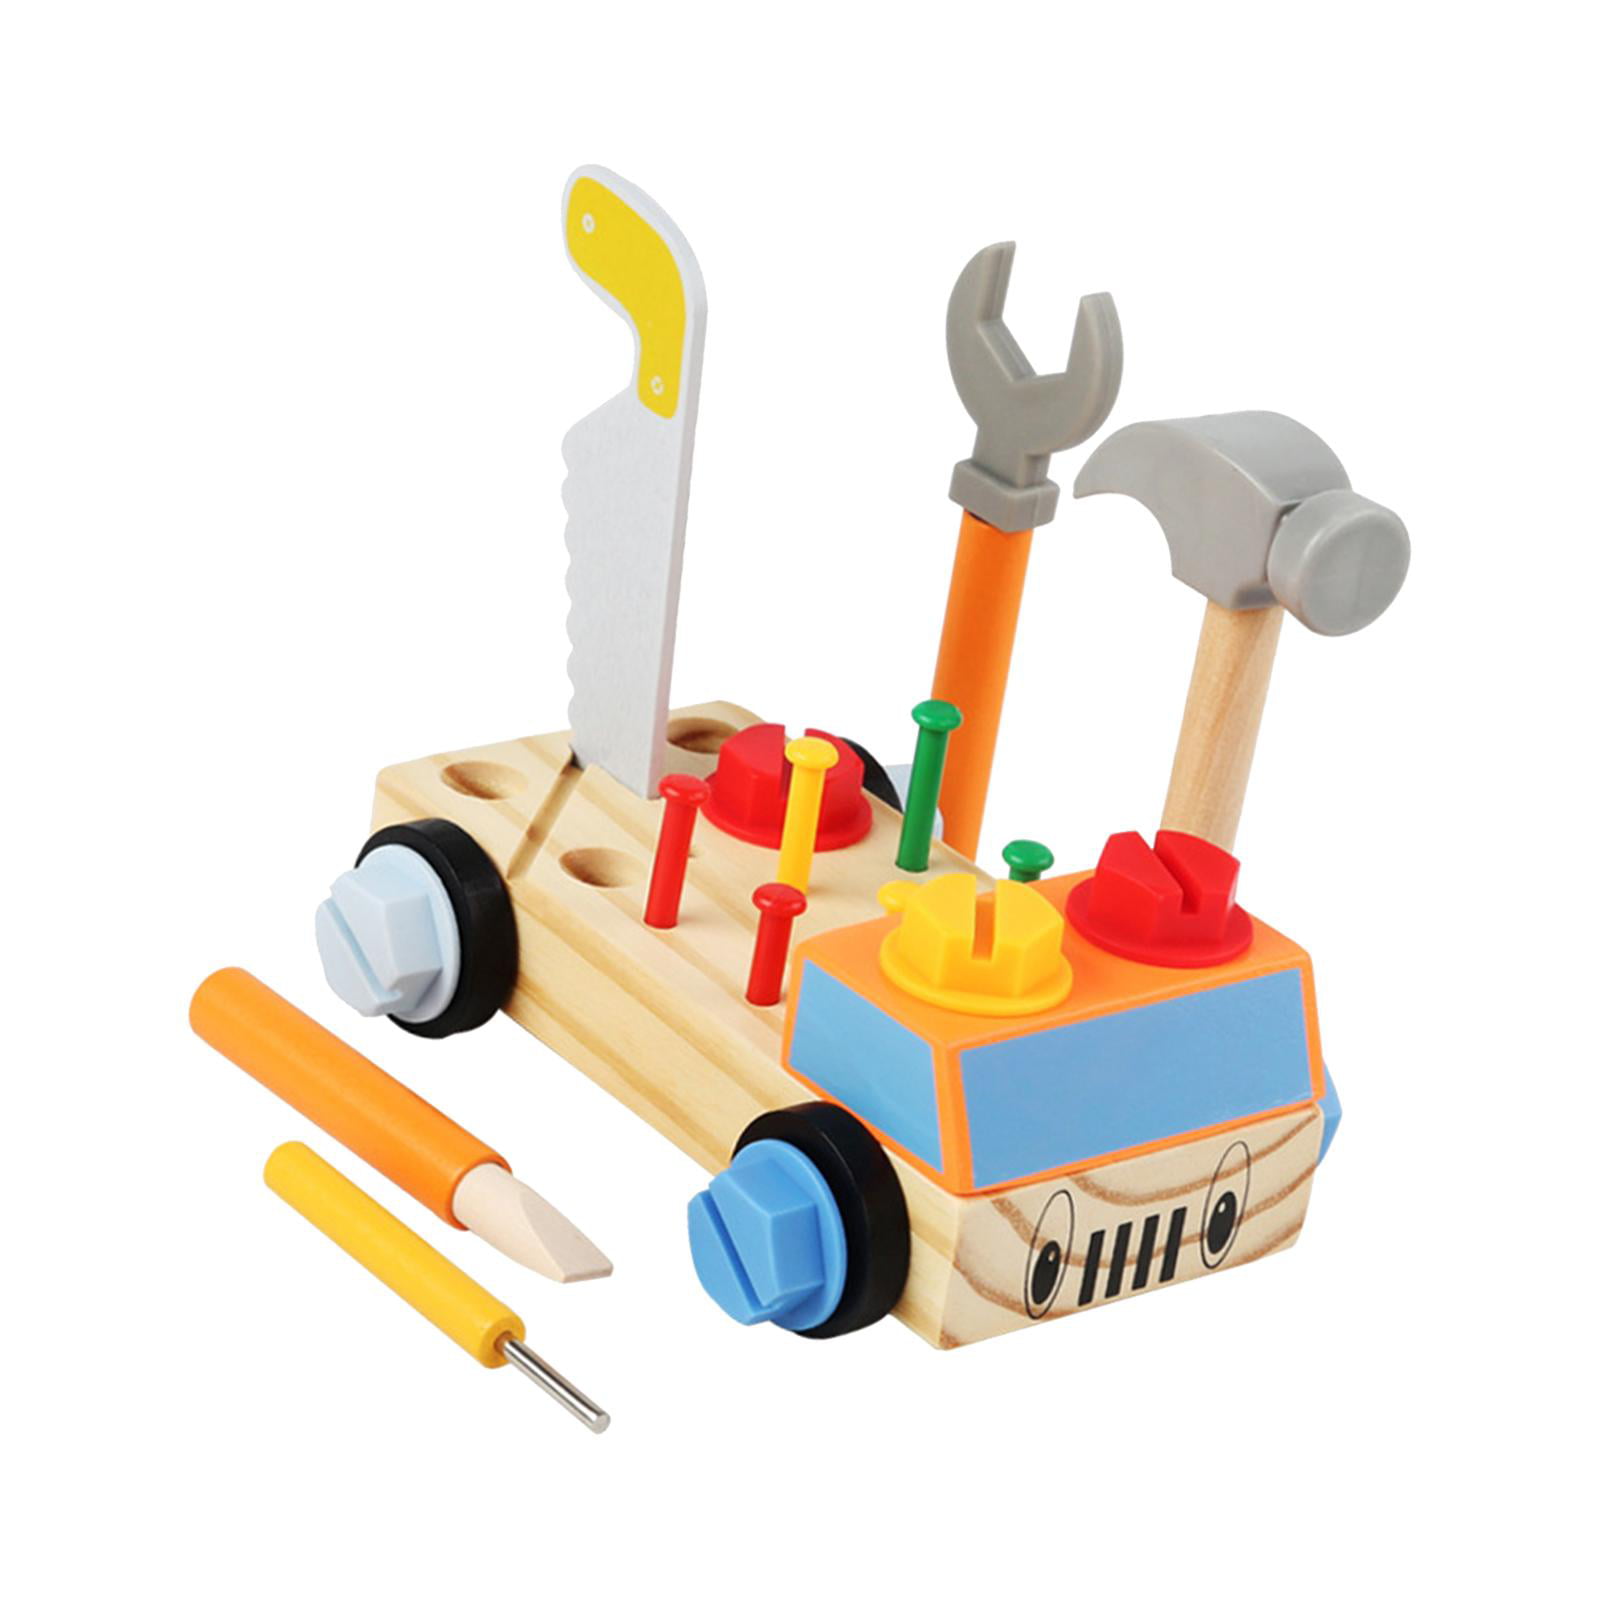 Montessori tool set - 3+ year olds - Eco-friendly